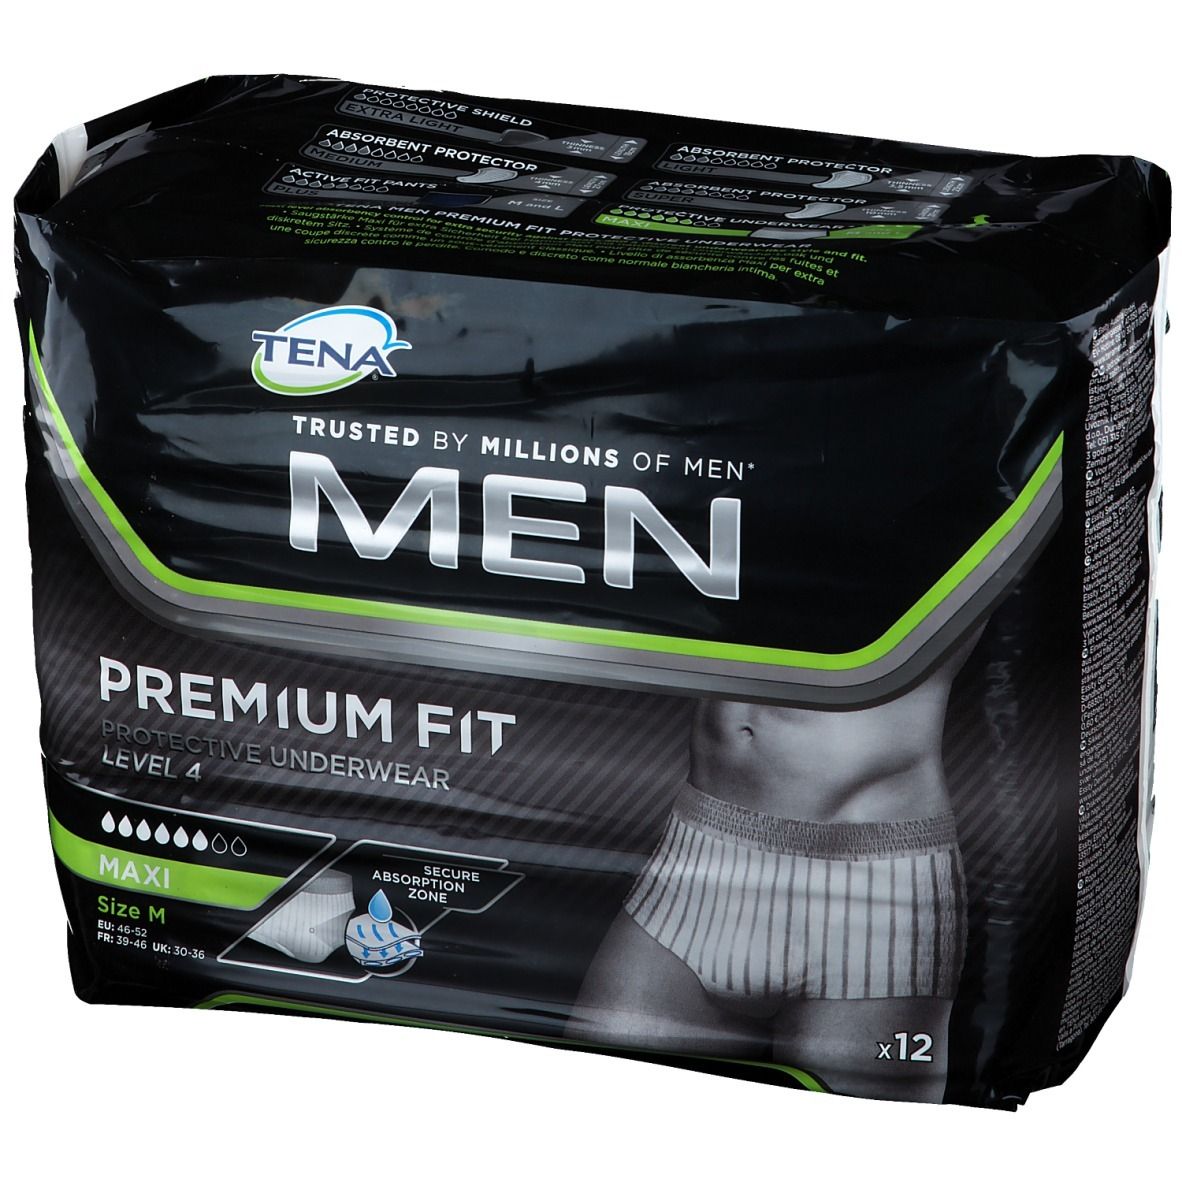 Tena Men Premium Fit Protection Level 4 Medium - shop-pharmacie.fr